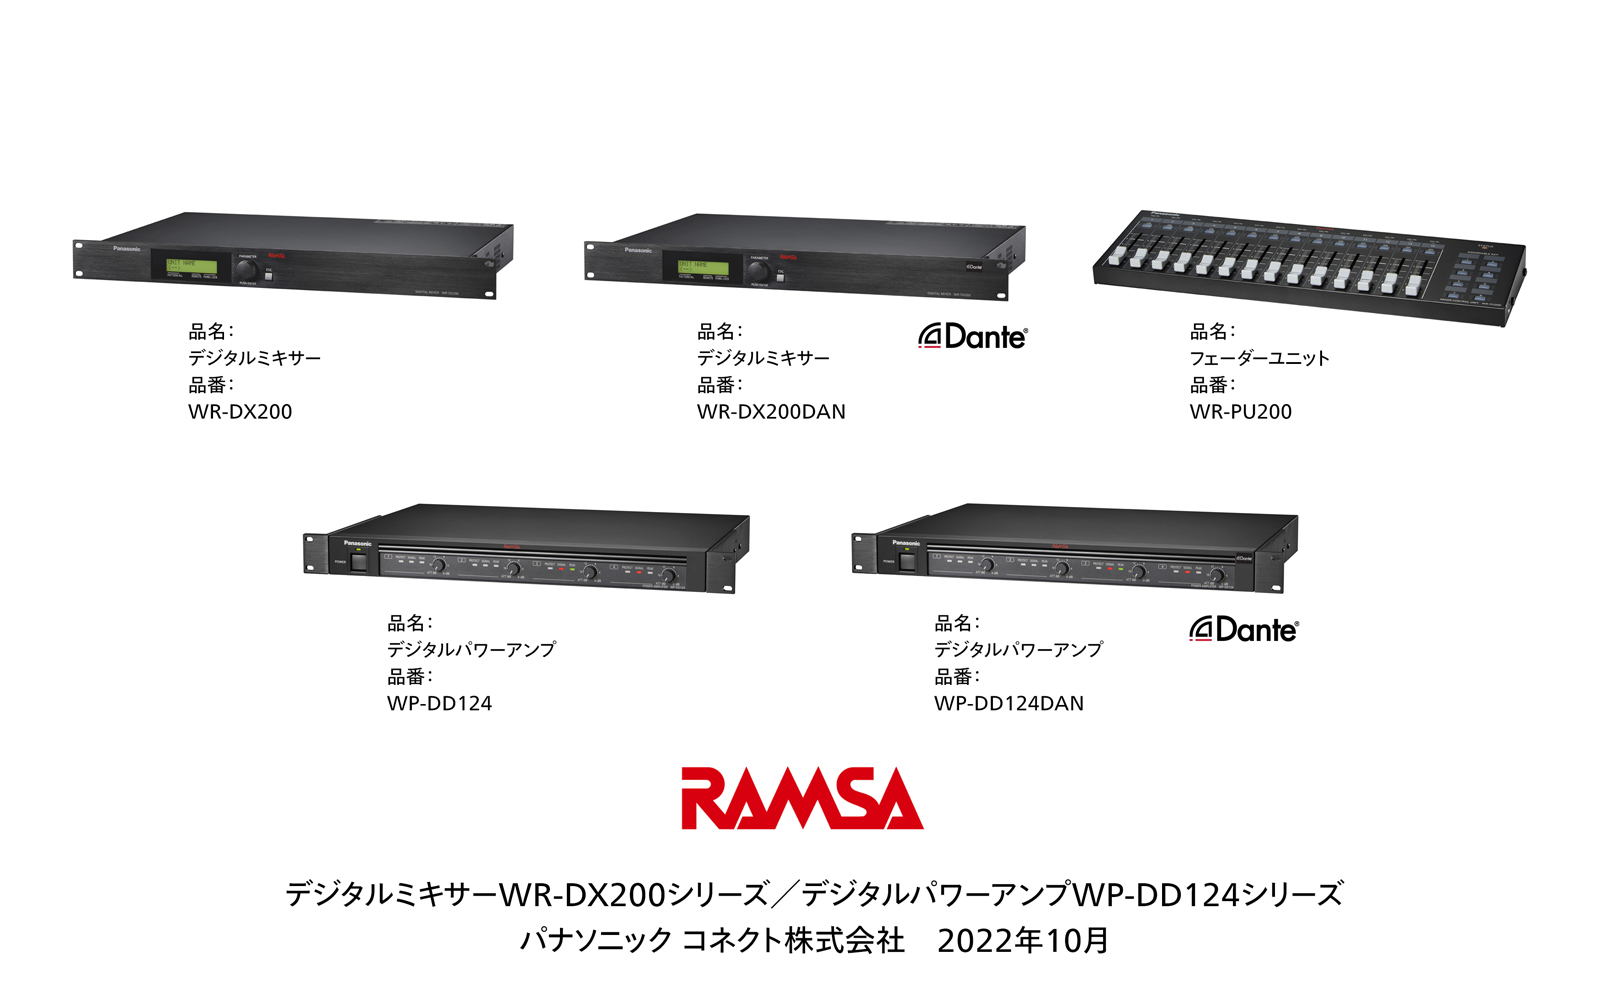 RAMSA デジタルミキサー WR-DX200シリーズ / デジタルパワーアンプ WP-DD124シリーズ